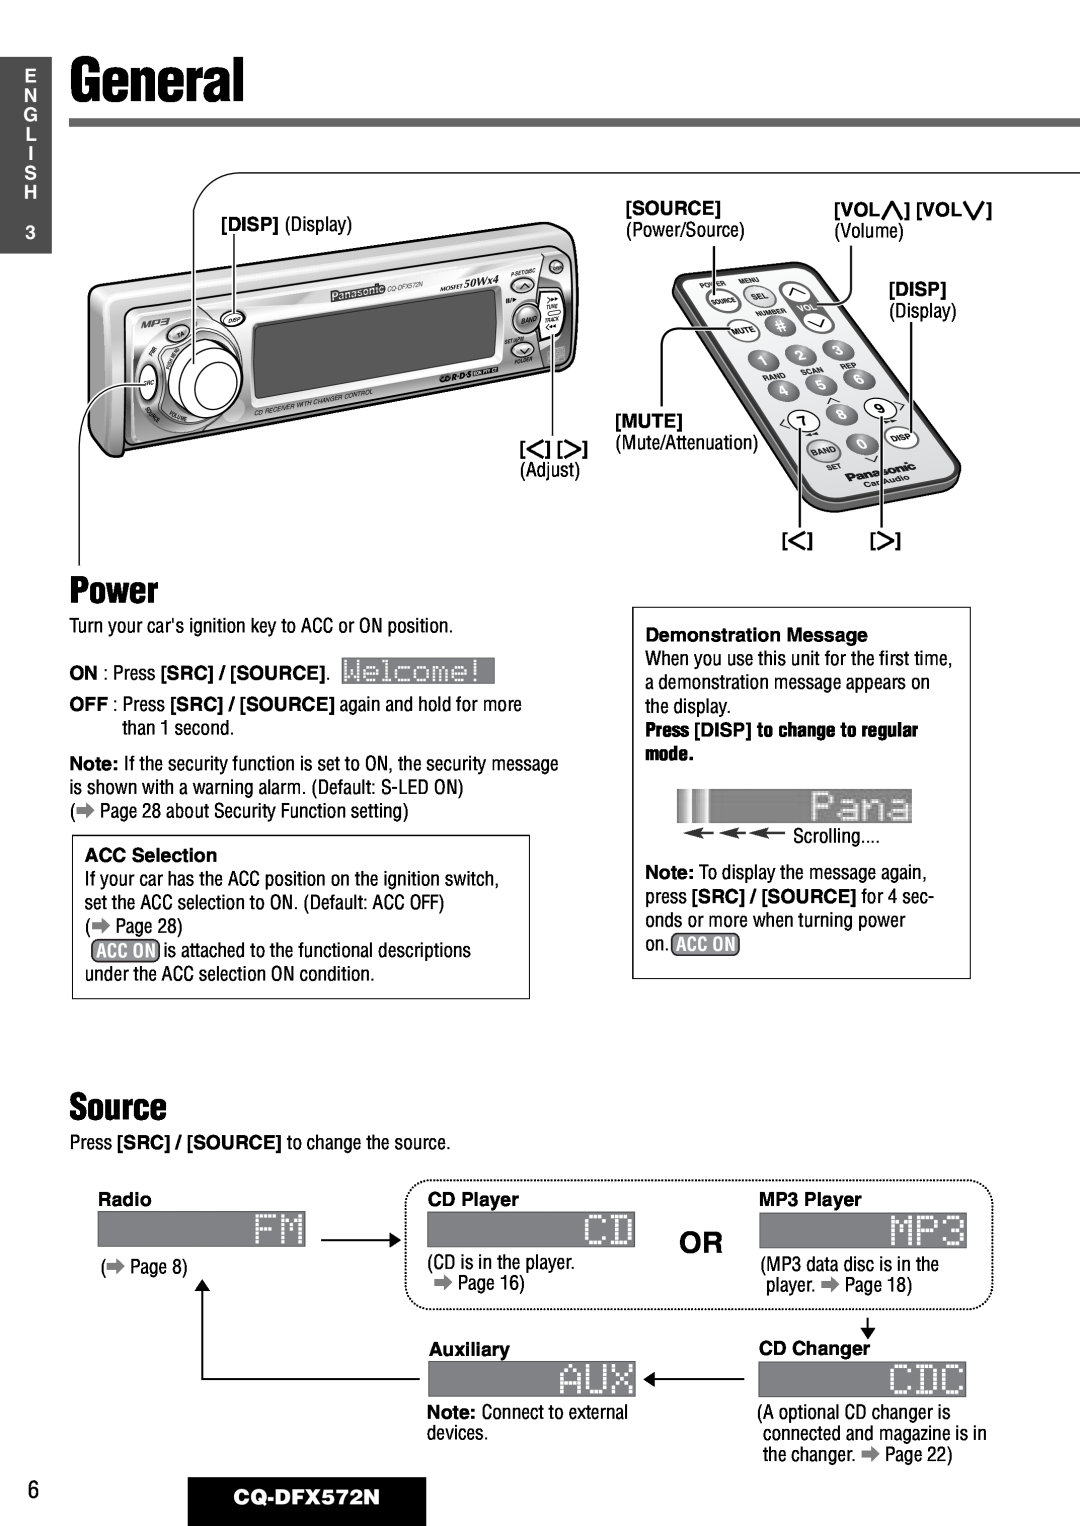 Panasonic operating instructions General, Power, Source, 6CQ-DFX572N, E N G L I S H 